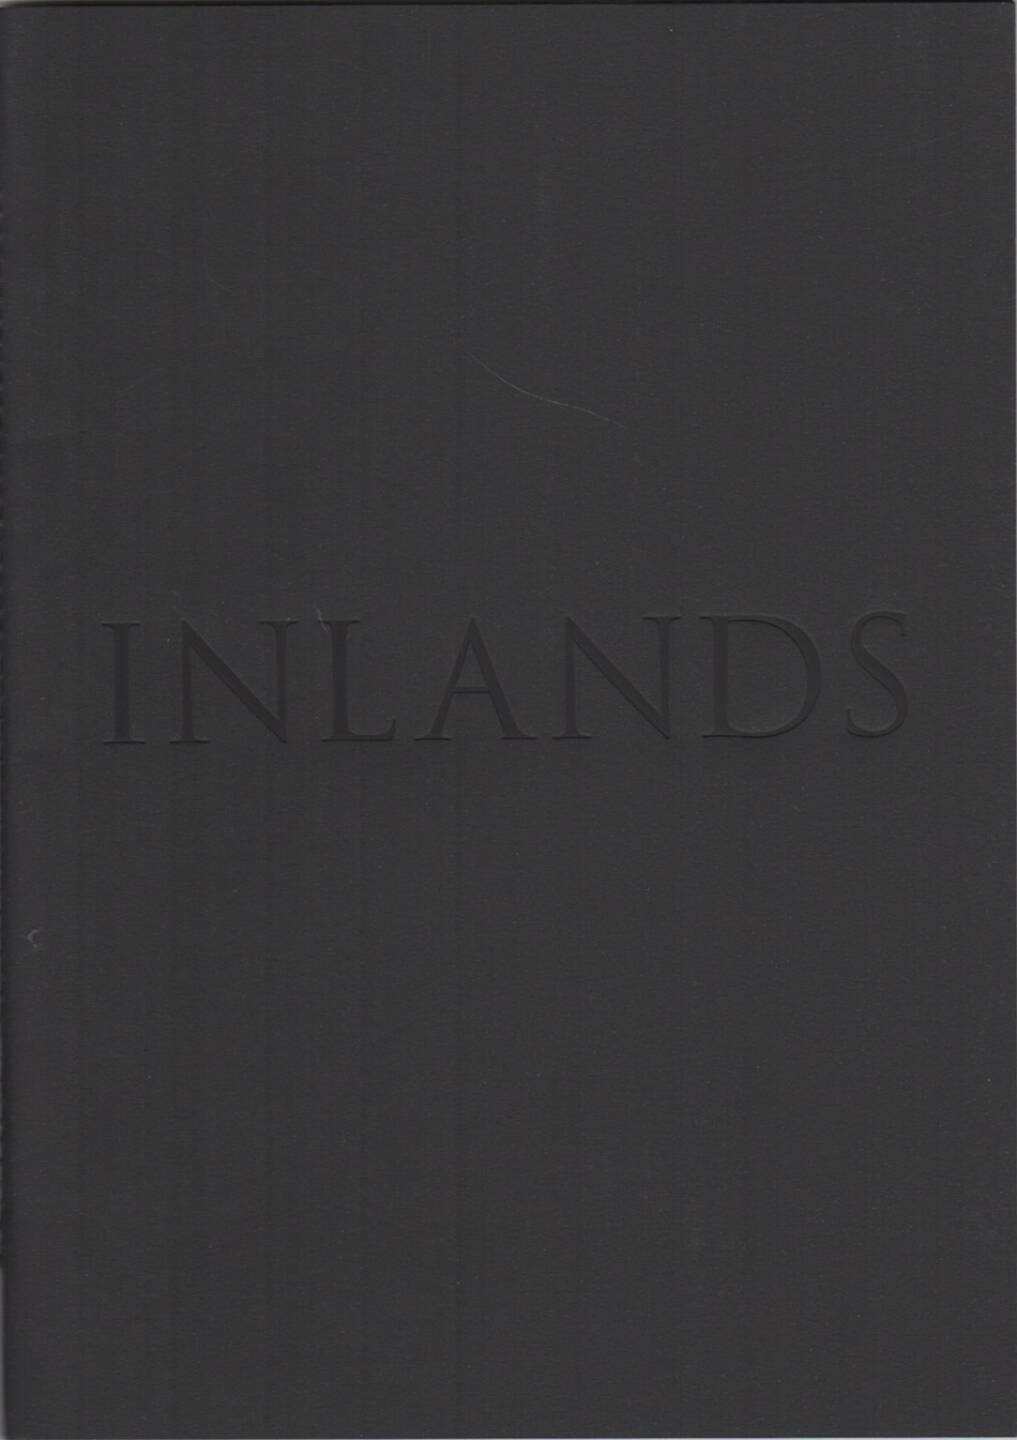 Petros Koublis - INLANDS, BlackMountain Books 2015, Cover - http://josefchladek.com/book/petros_koublis_-_inlands